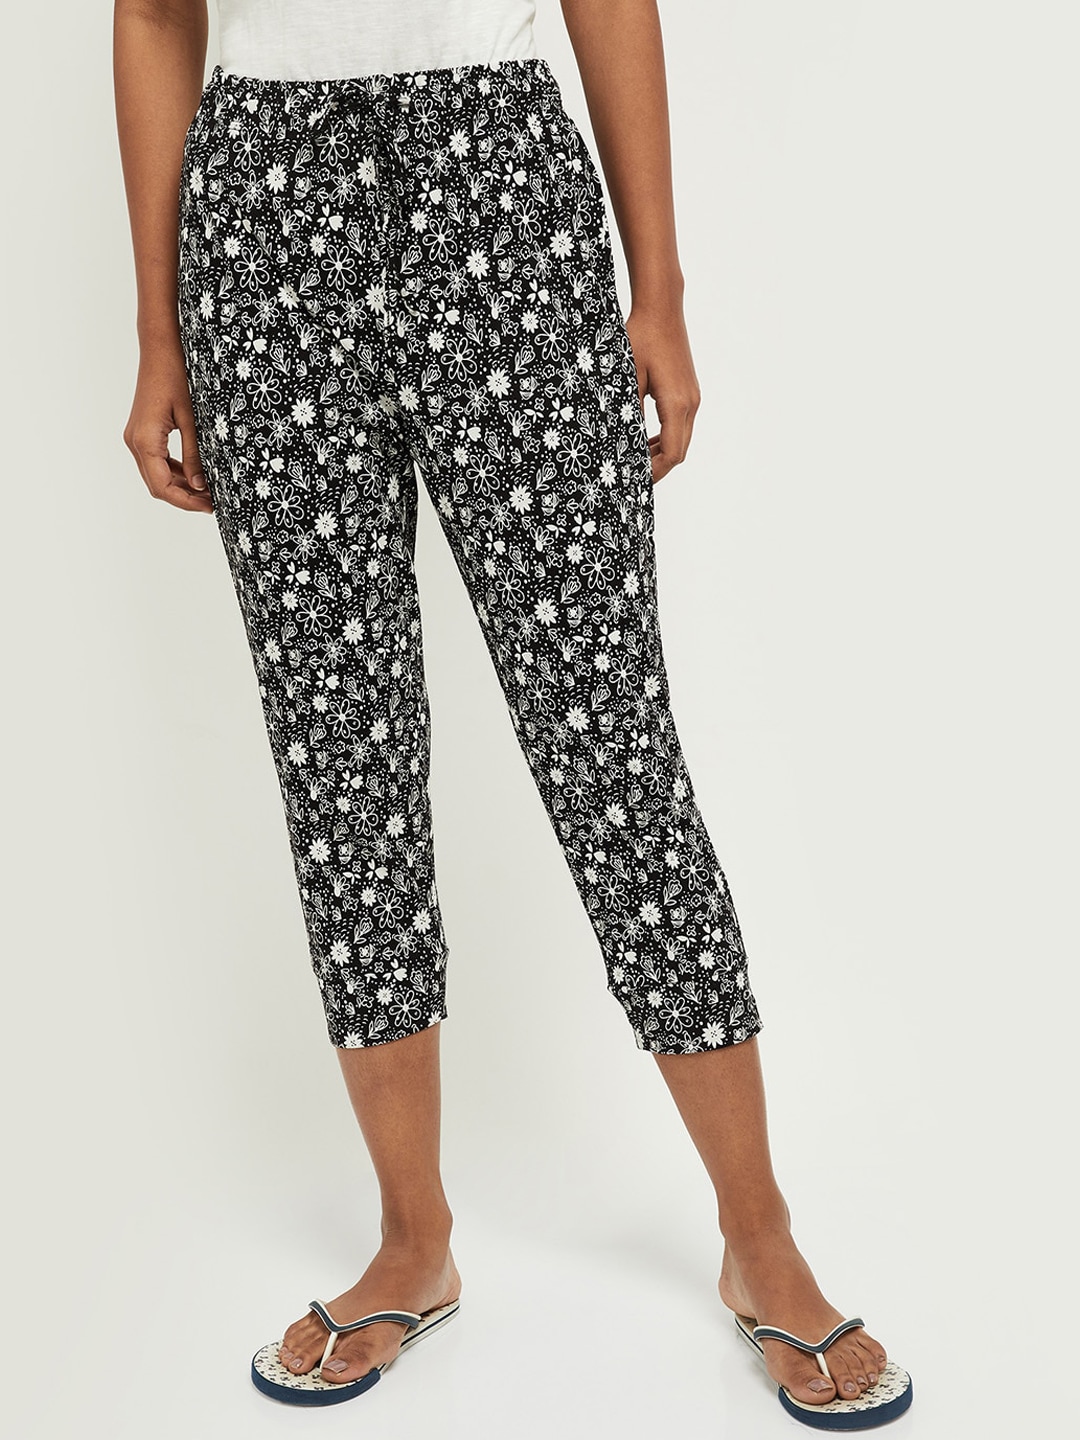 max Women Black Floral Printed Pyjamas Price in India